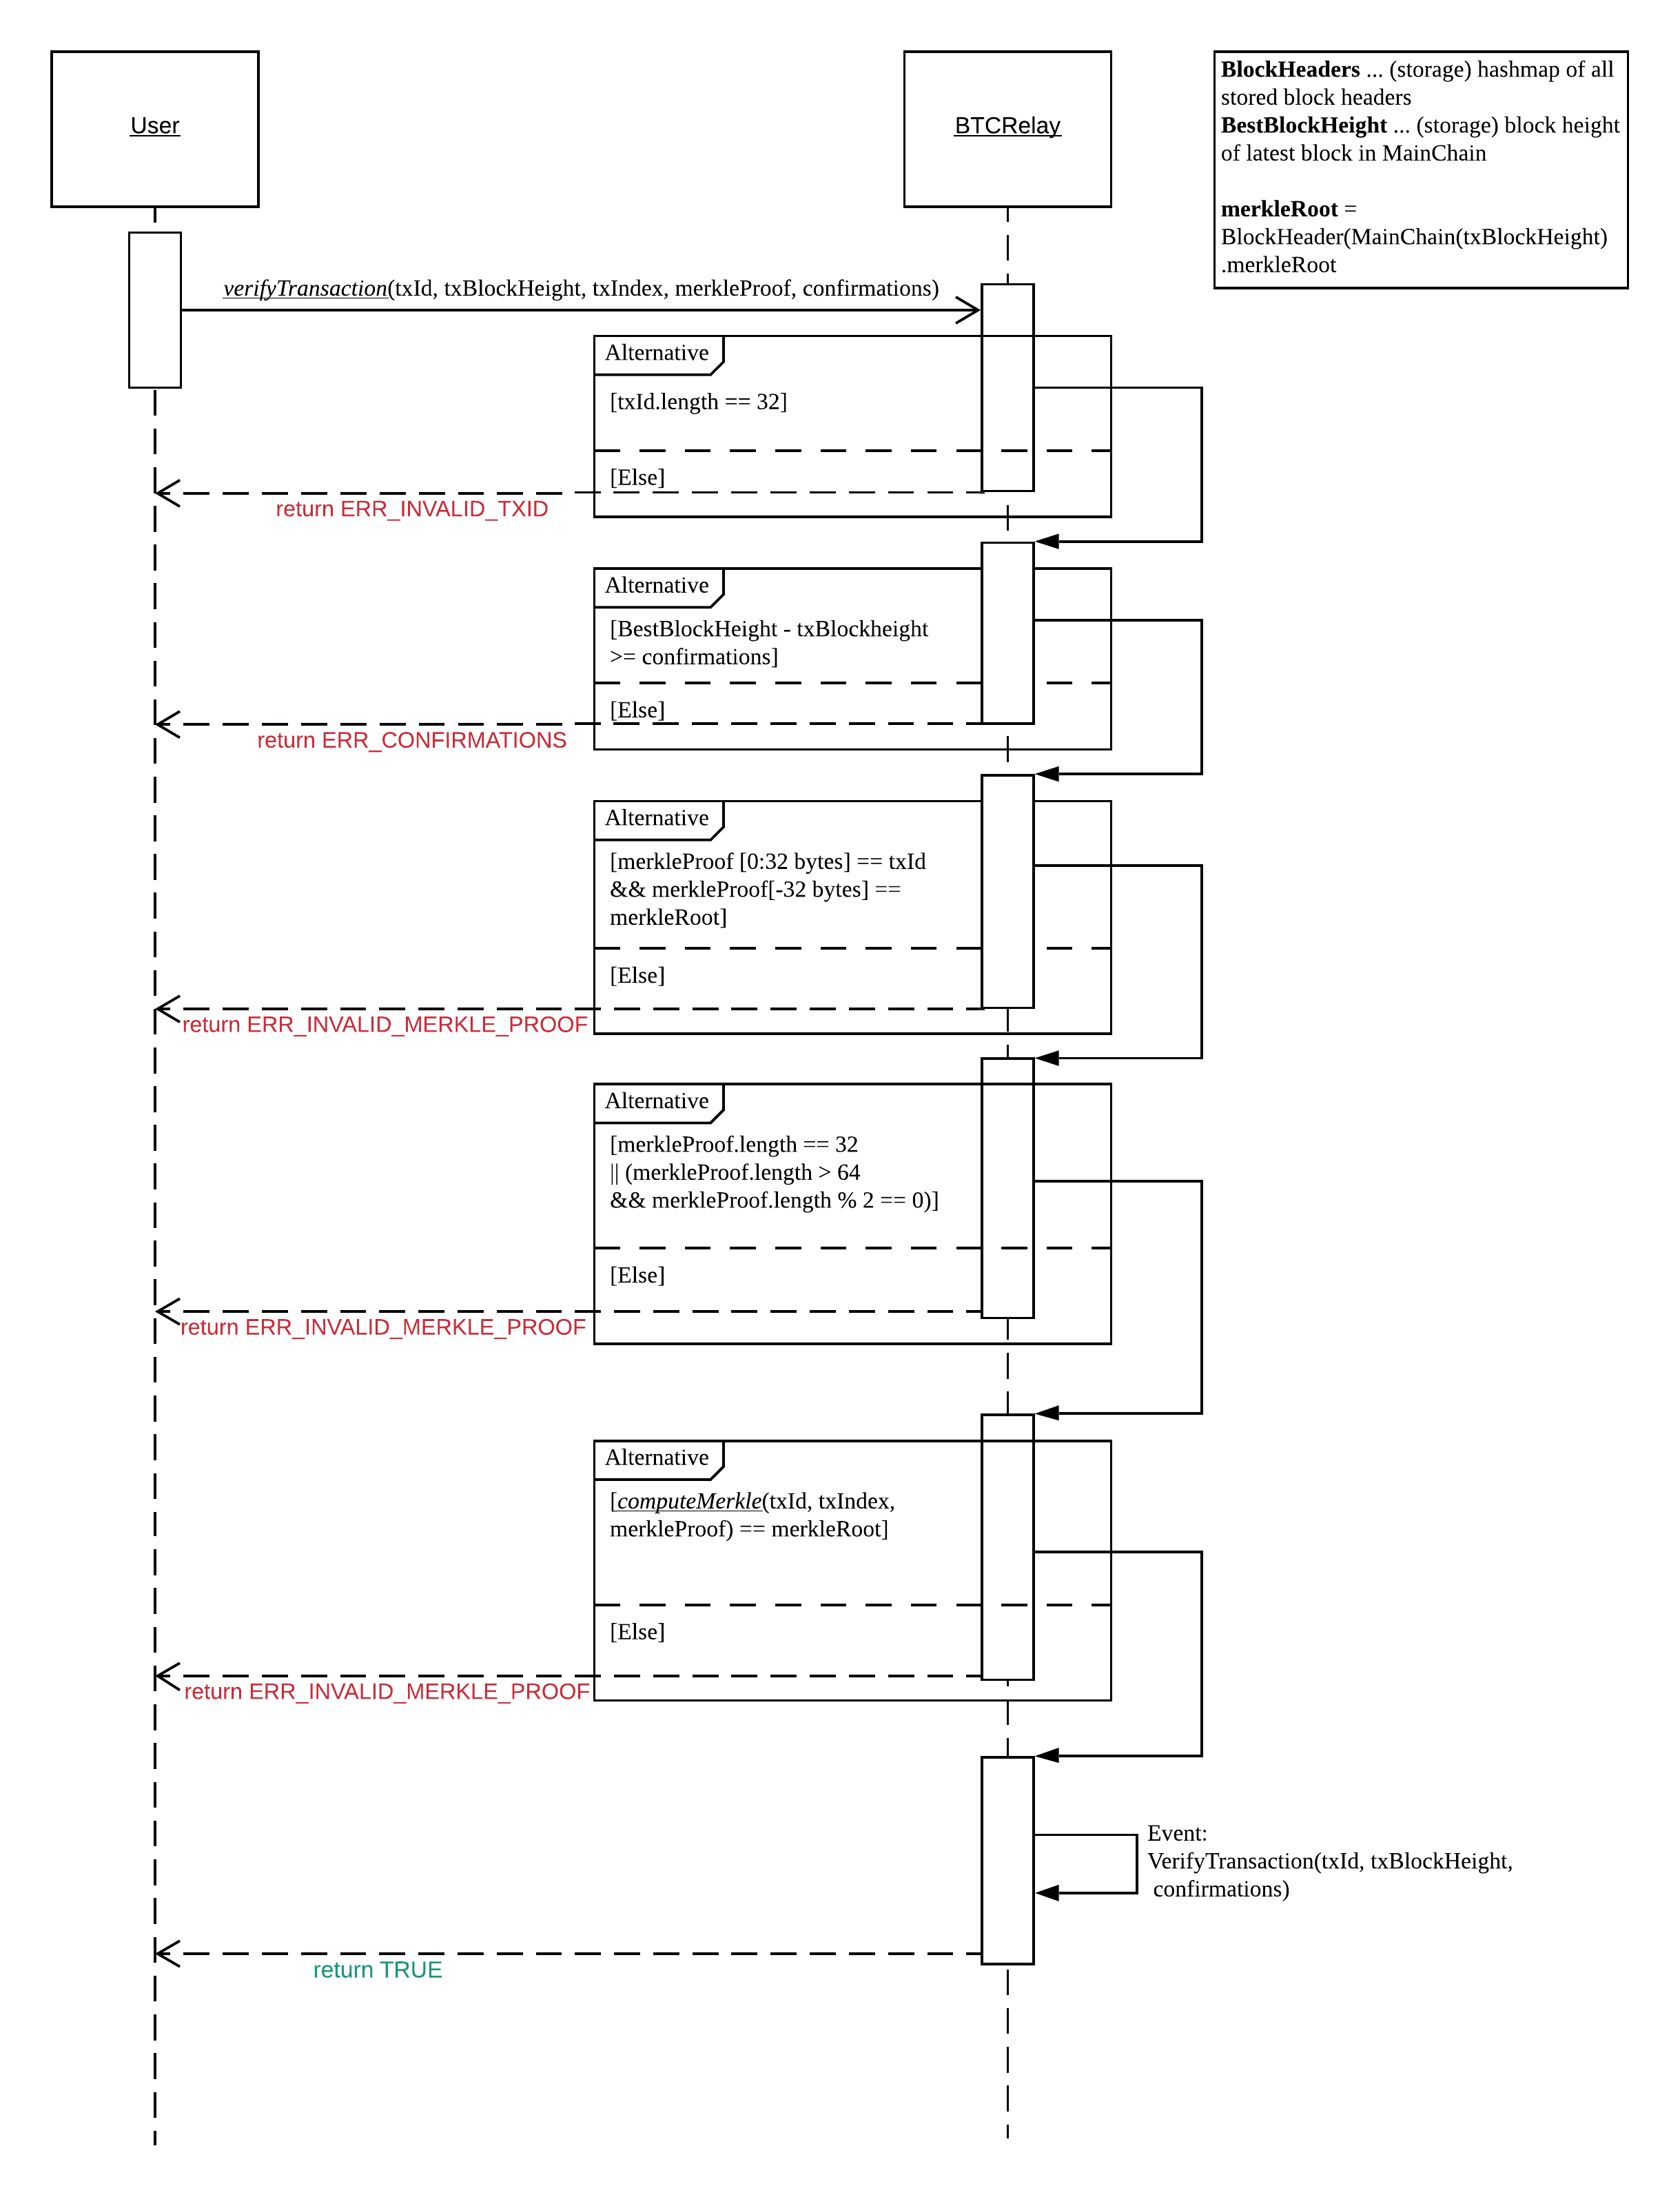 verifyTransactionInclusion sequence diagram